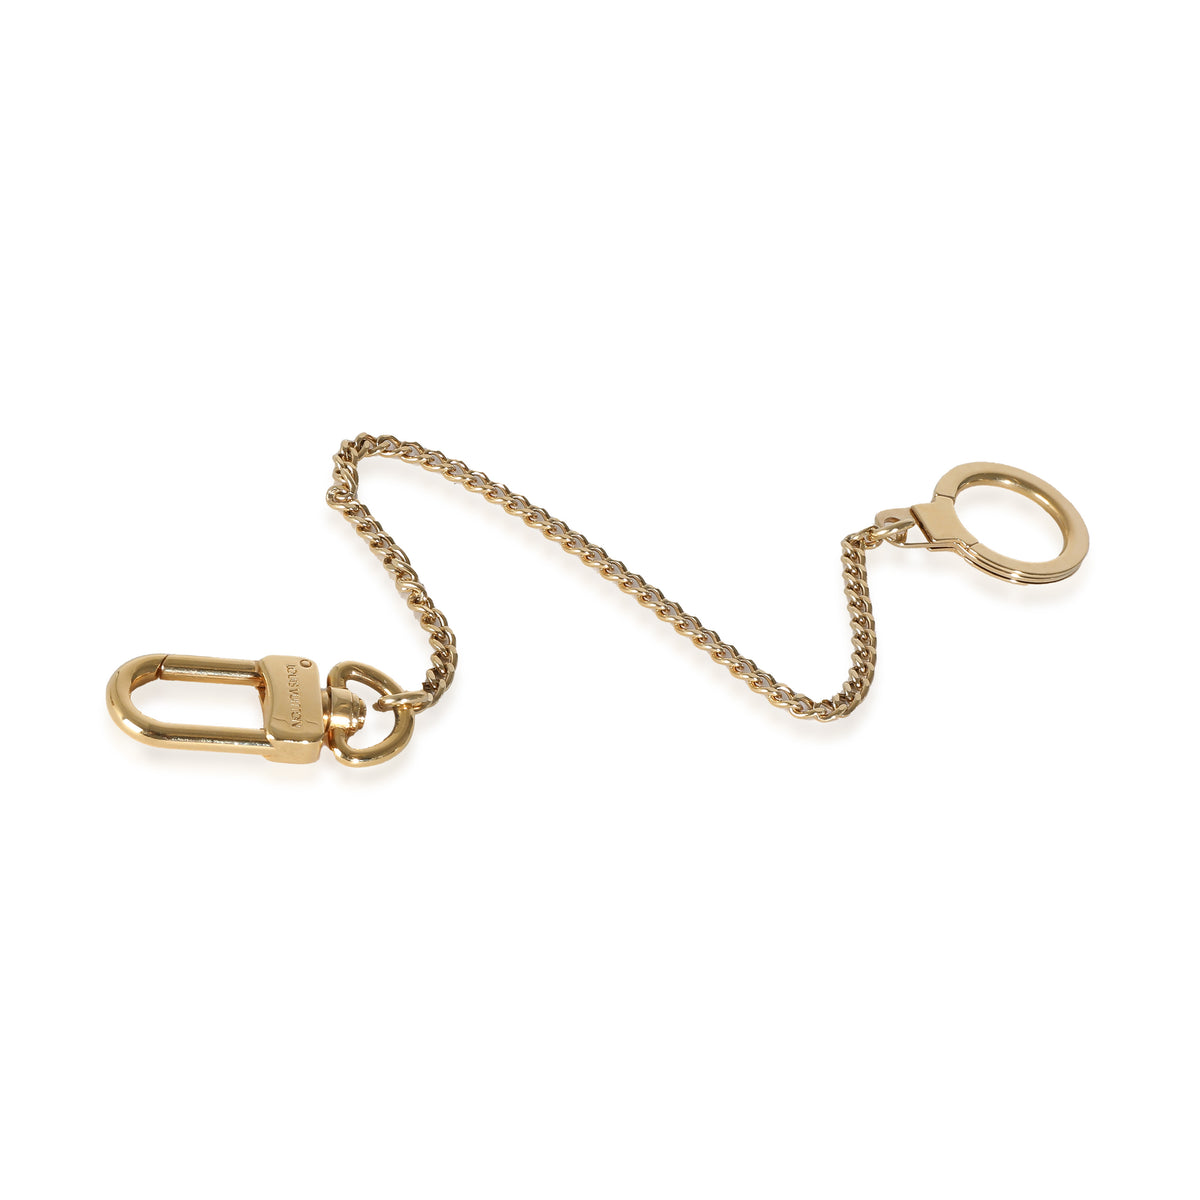 Louis Vuitton Gold Metal Bag Extender Key Chain